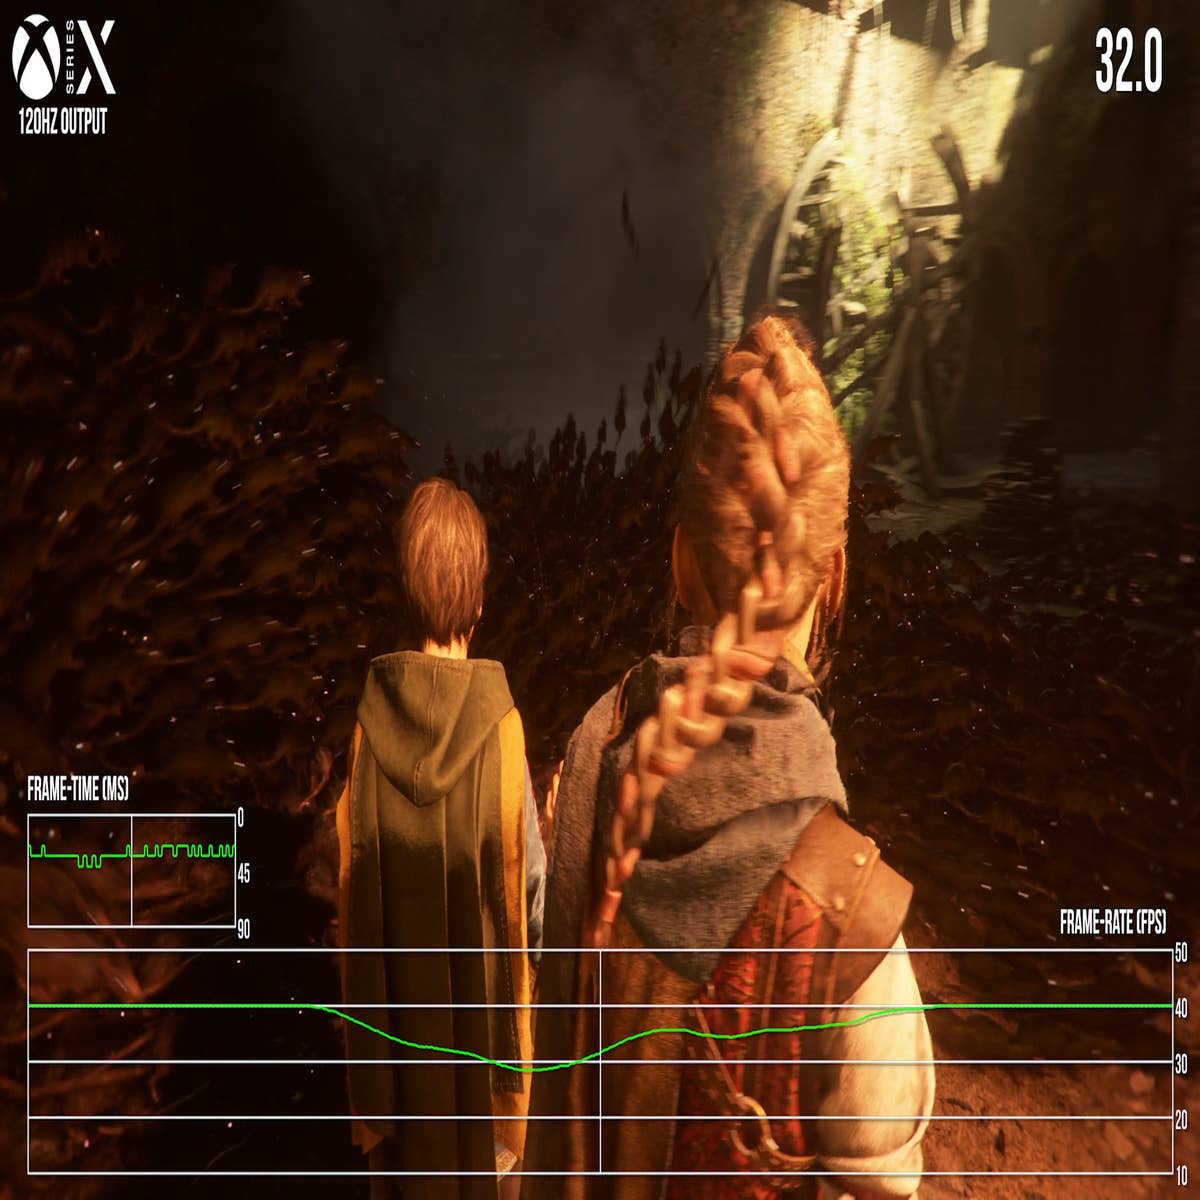 A Plague Tale: Requiem grabs 60 FPS performance mode on Xbox Series X